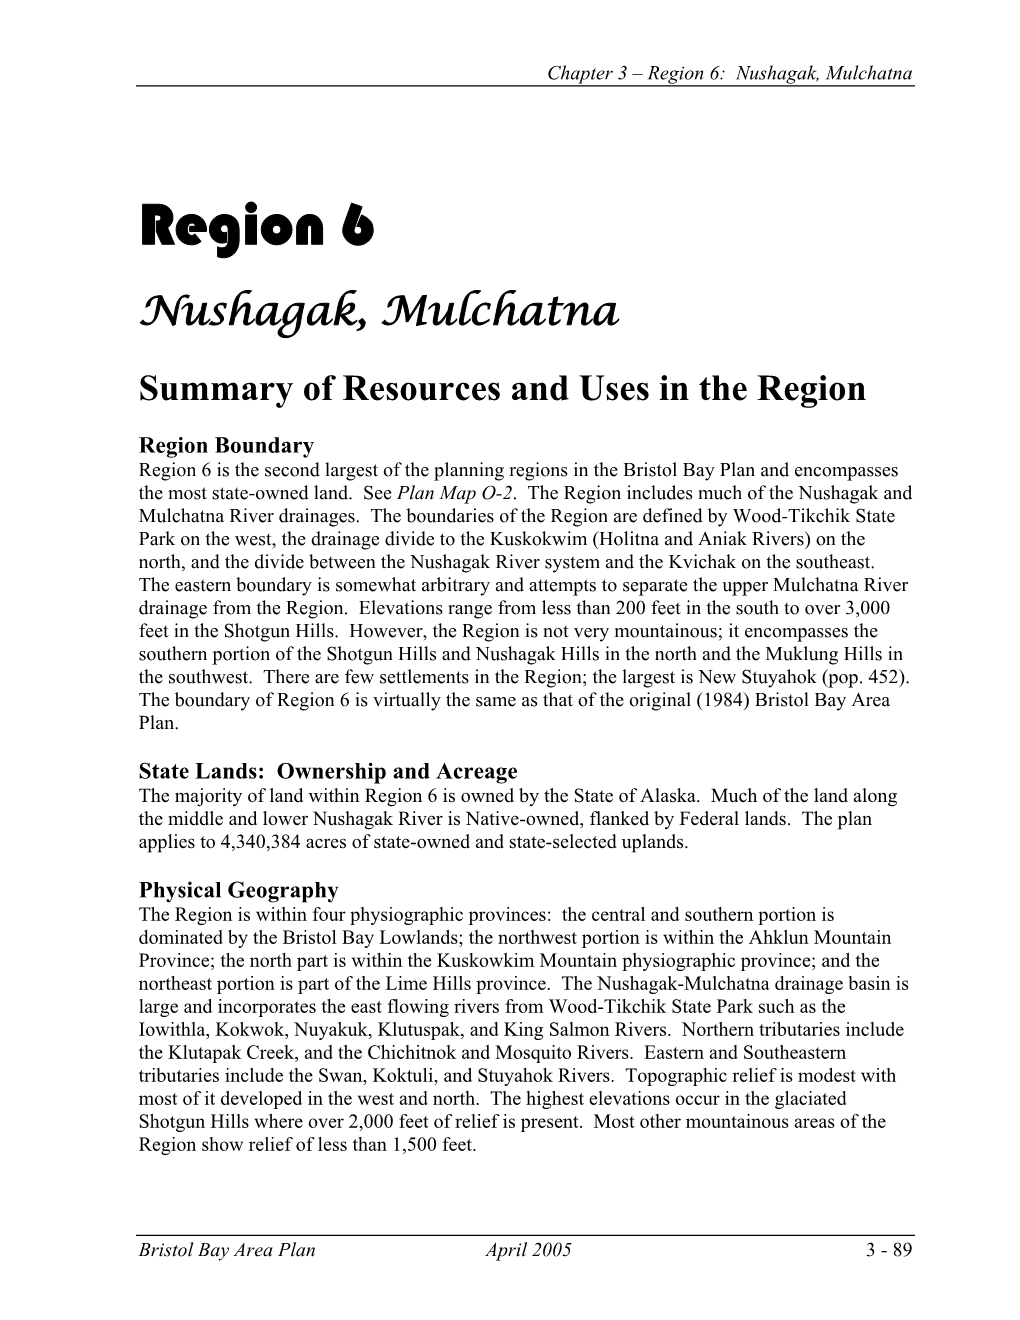 Region 6: Nushagak, Mulchatna